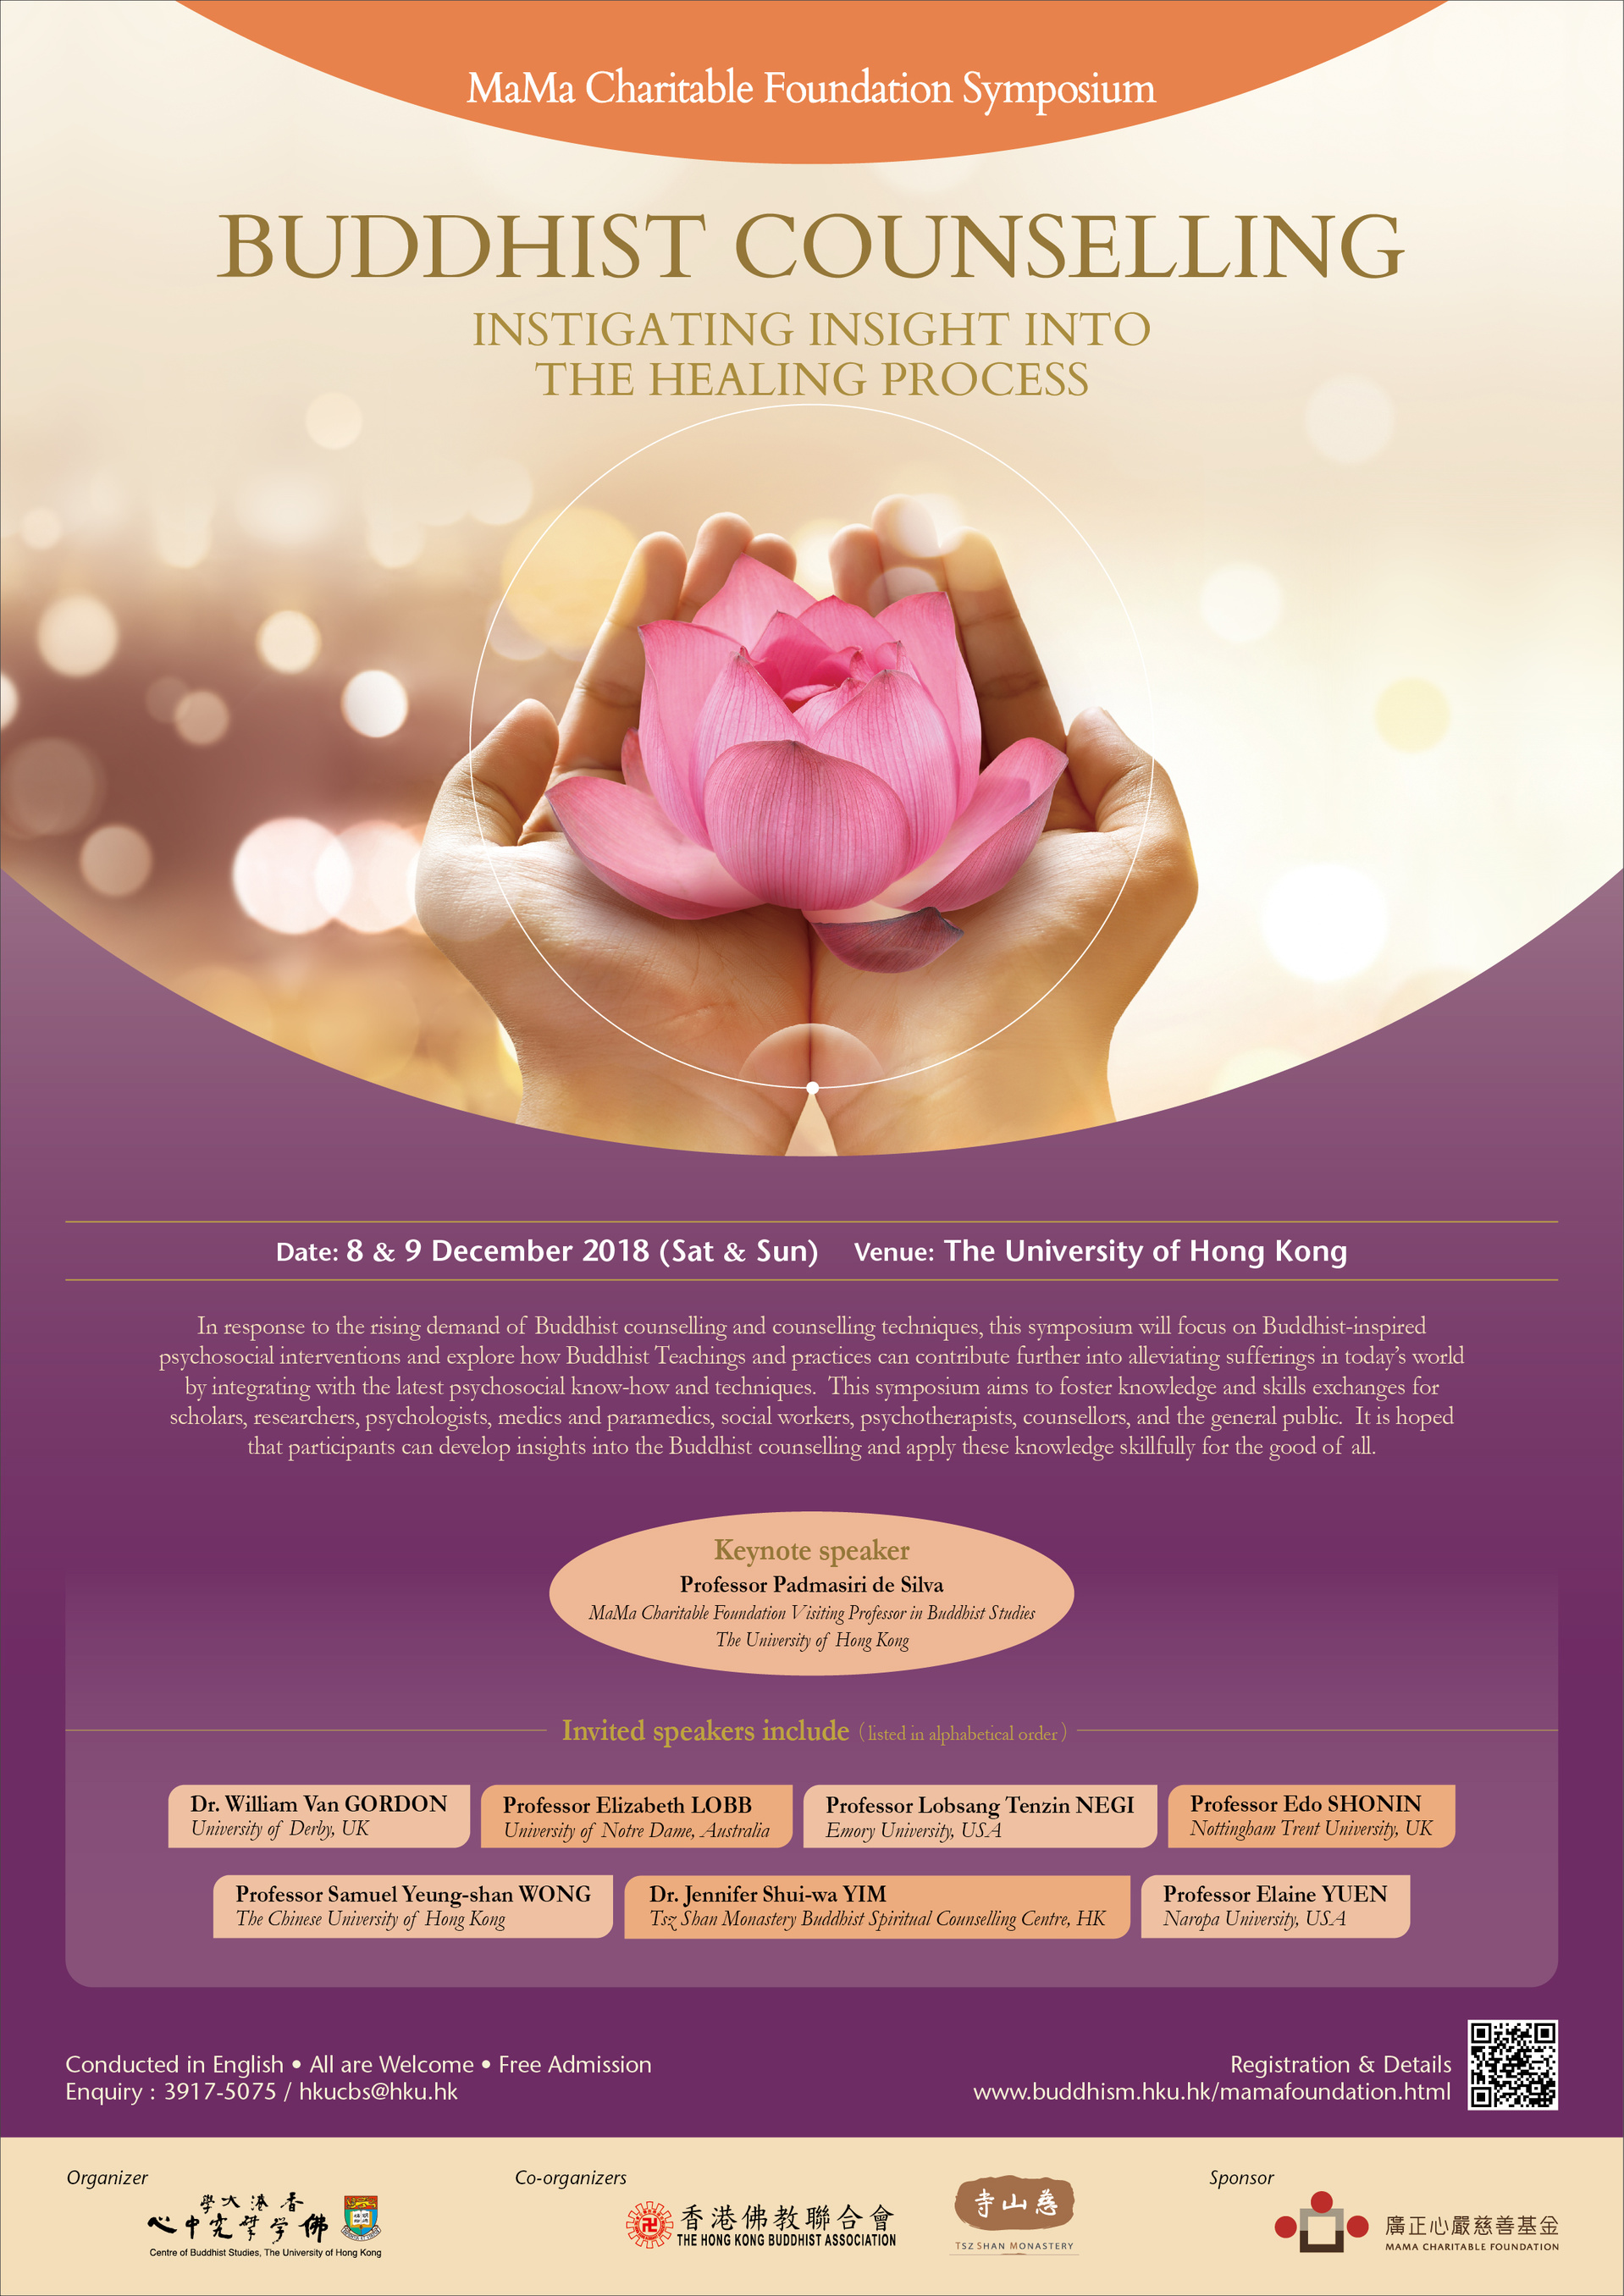 MaMa Charitable Foundation Symposium on Buddhist Counselling